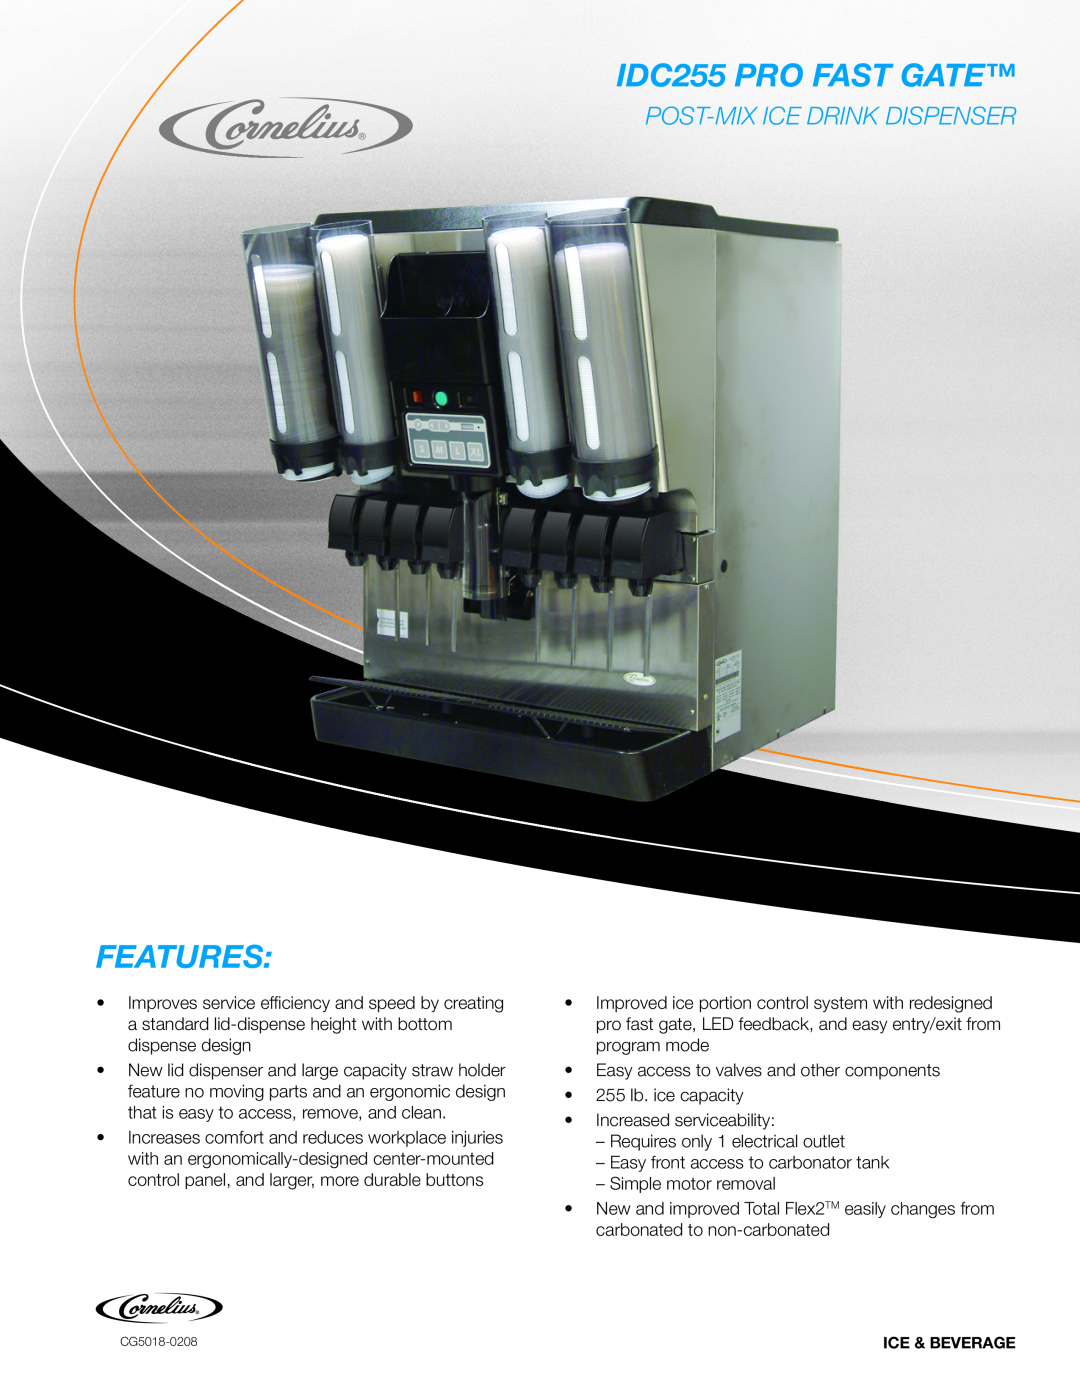 Cornelius manual Features, IDC255 PRO FAST GATE, Post-Mix Ice Drink Dispenser 